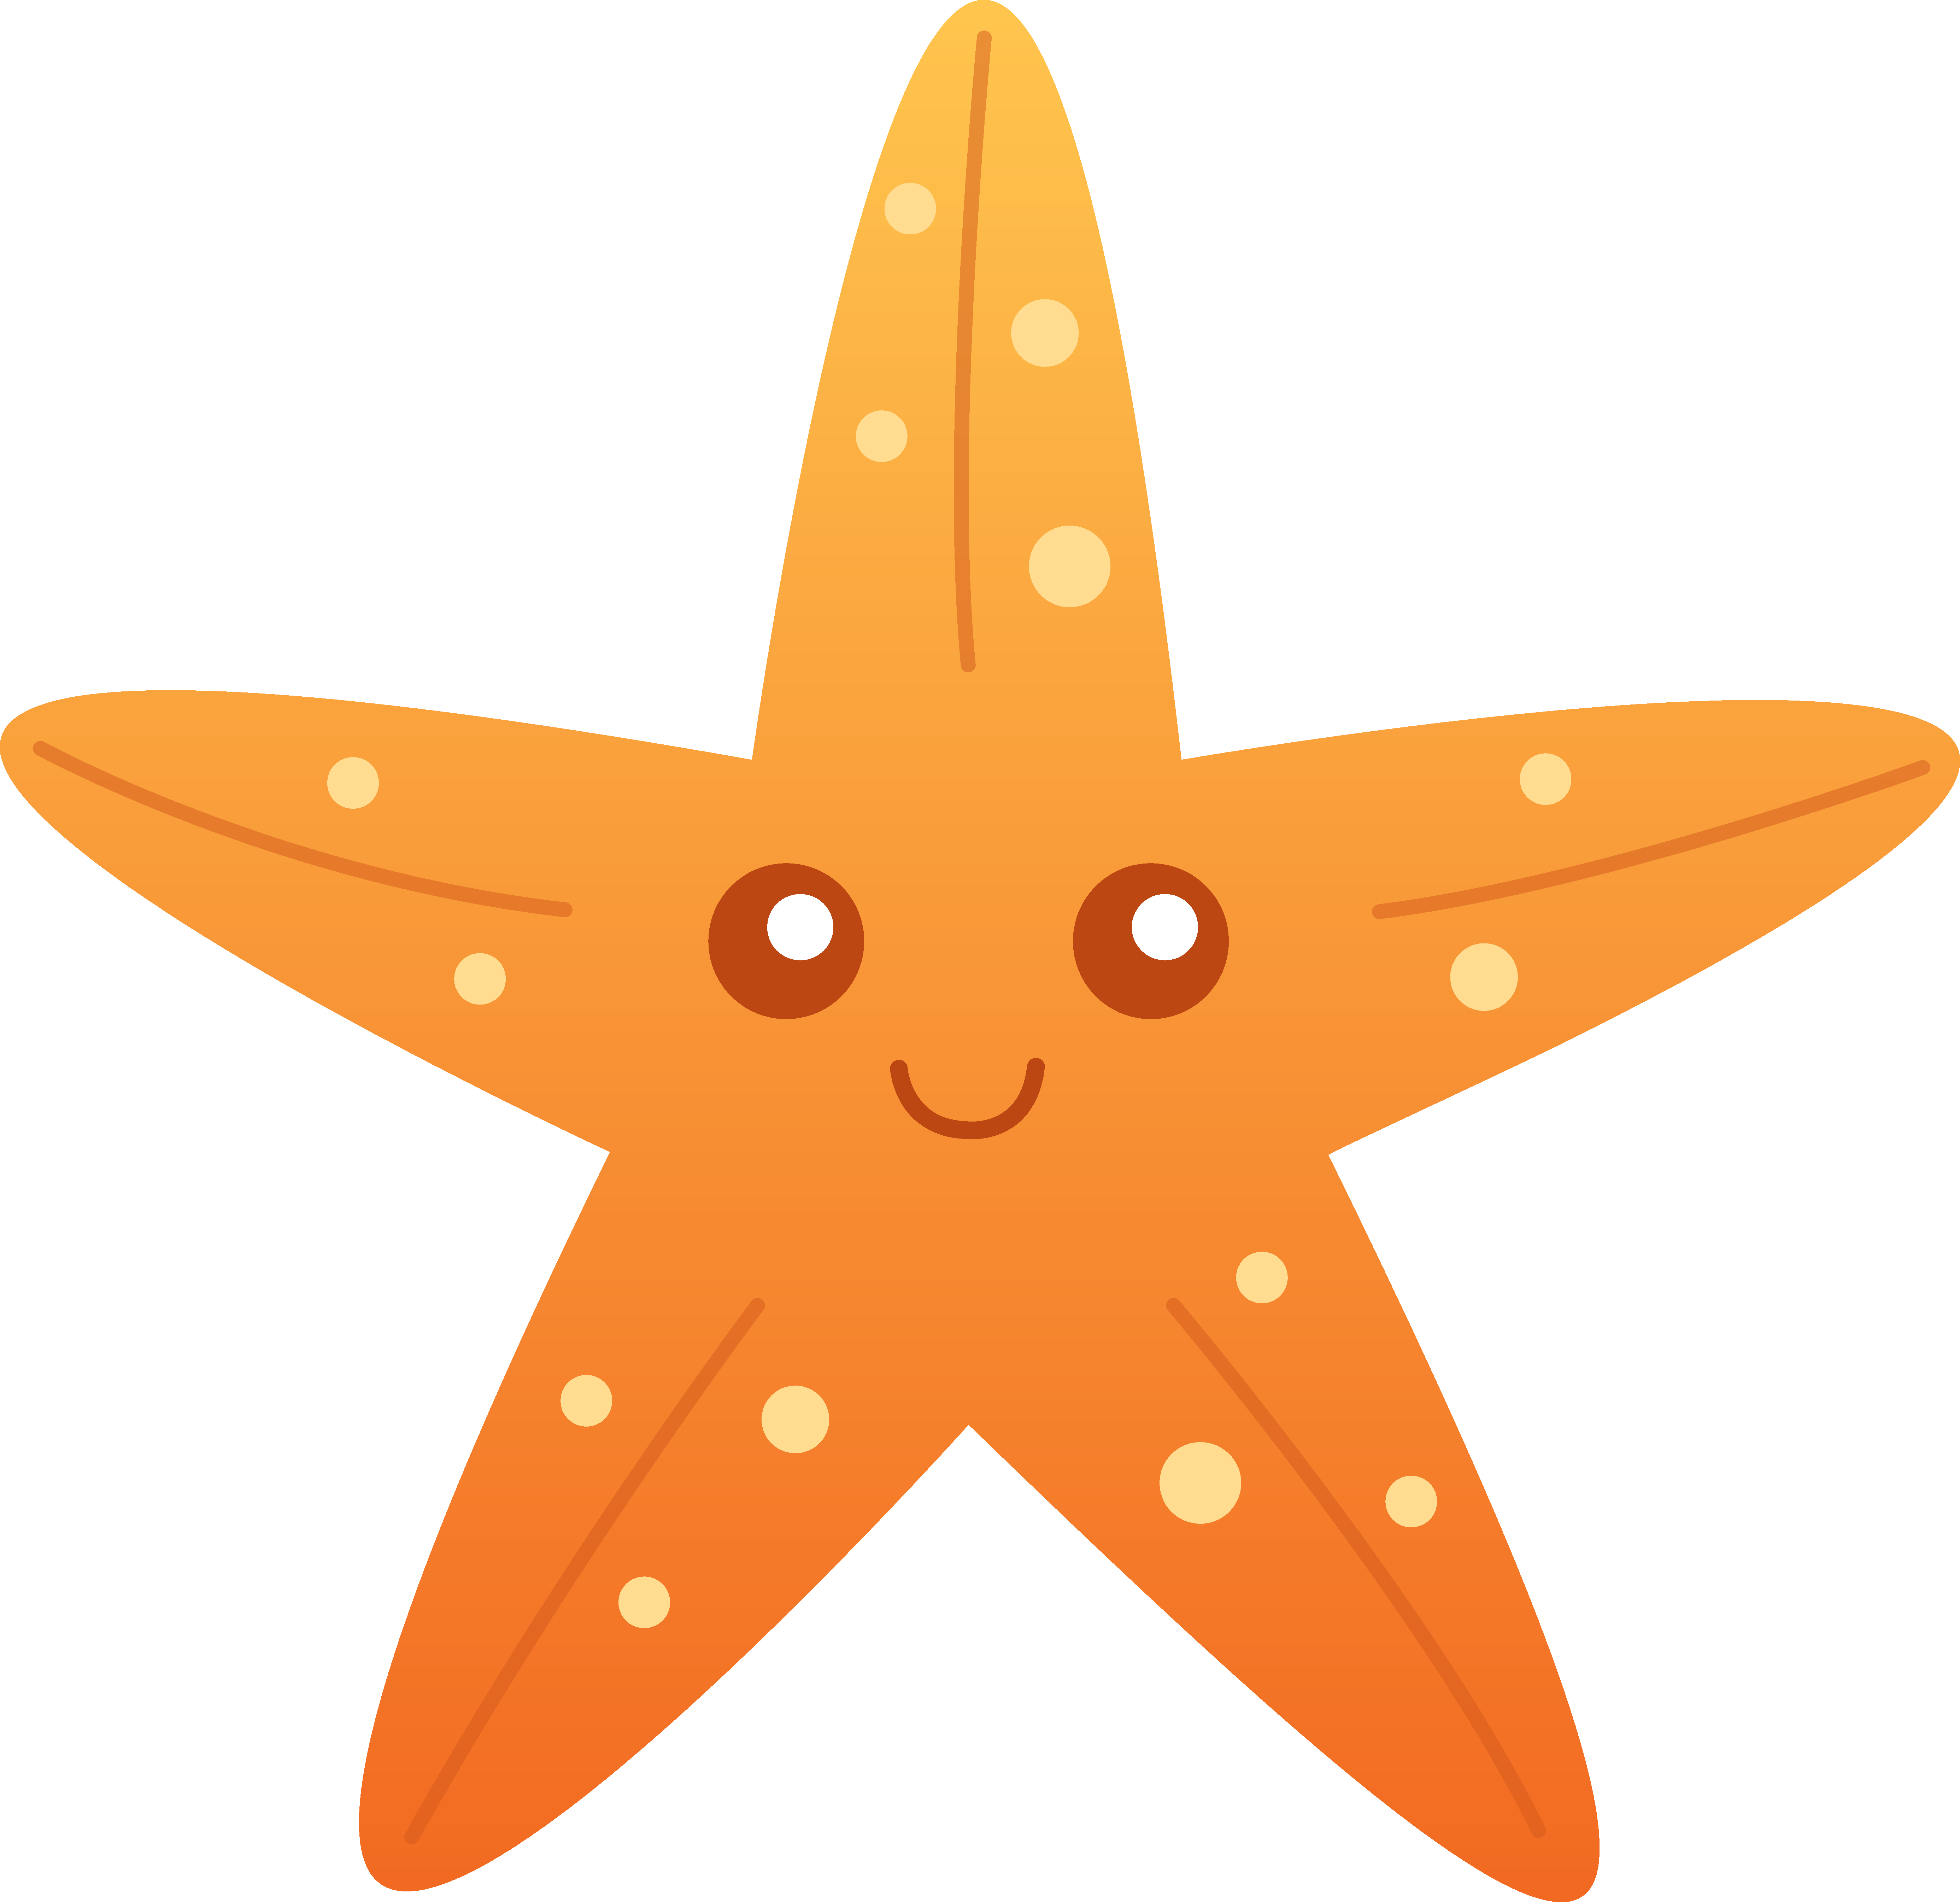 Clipart star cute. Starfish panda free images